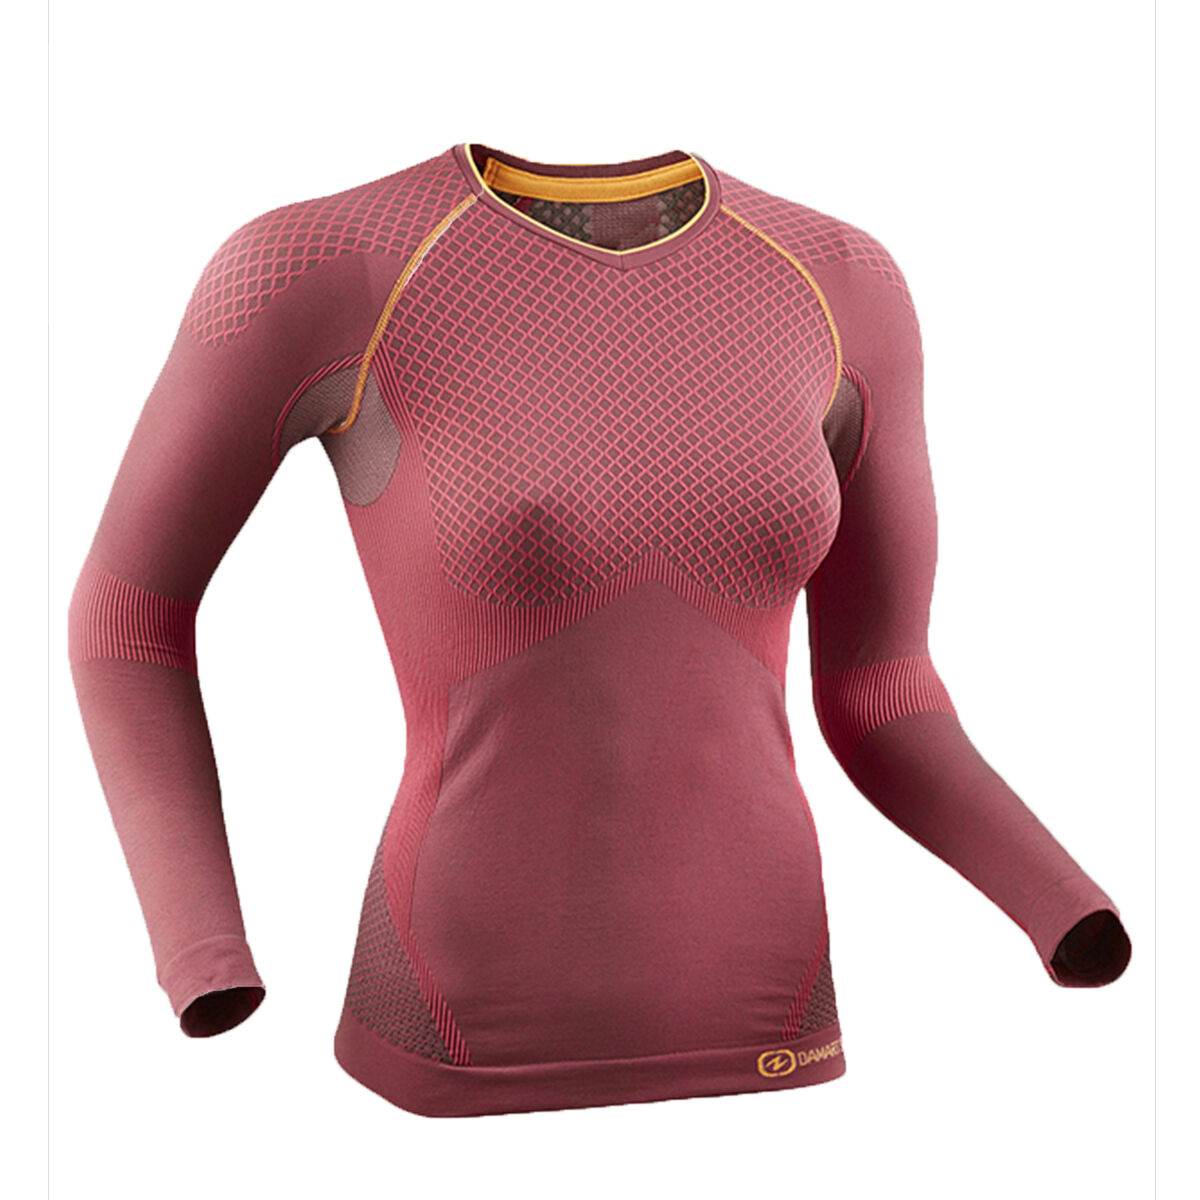 Damart Sport - Activ Body 3 - Camiseta - Mujer